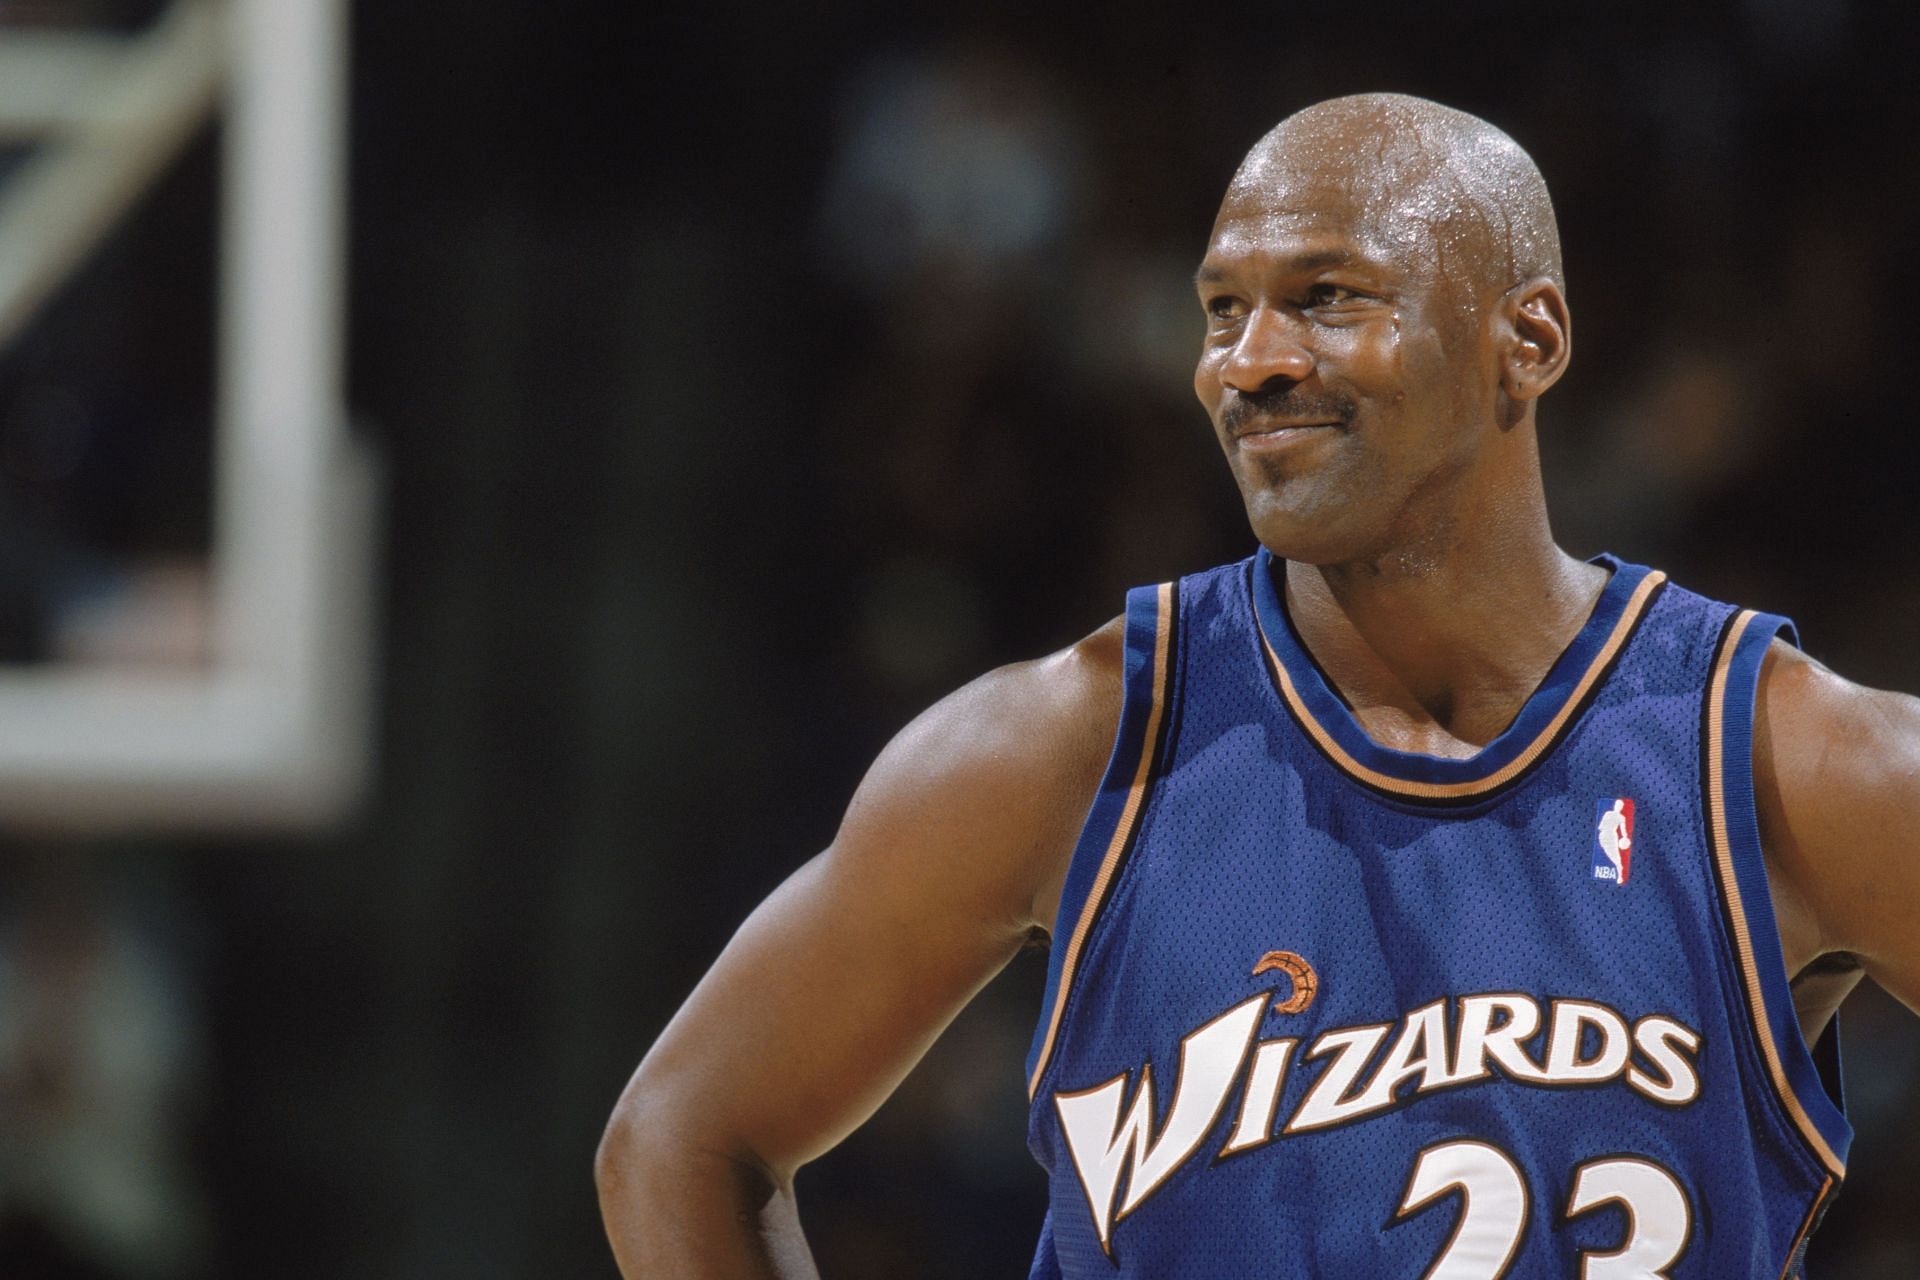 Michael Jordan Washington Bullets / Wizards 